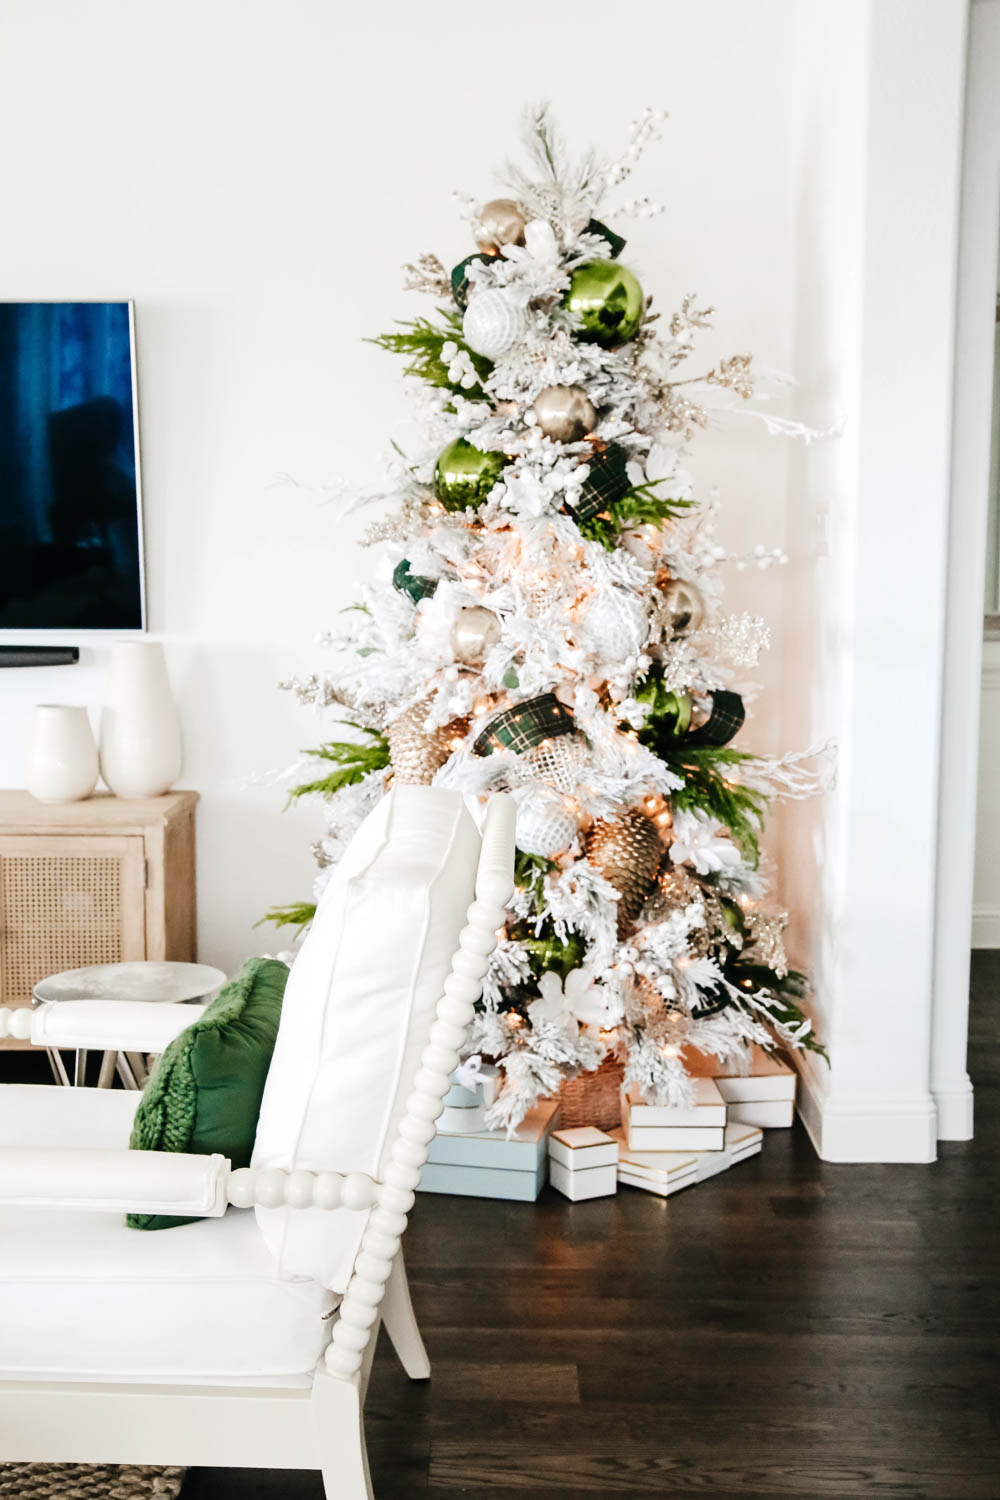 20 Amazing Christmas Tree Decorating Ideas